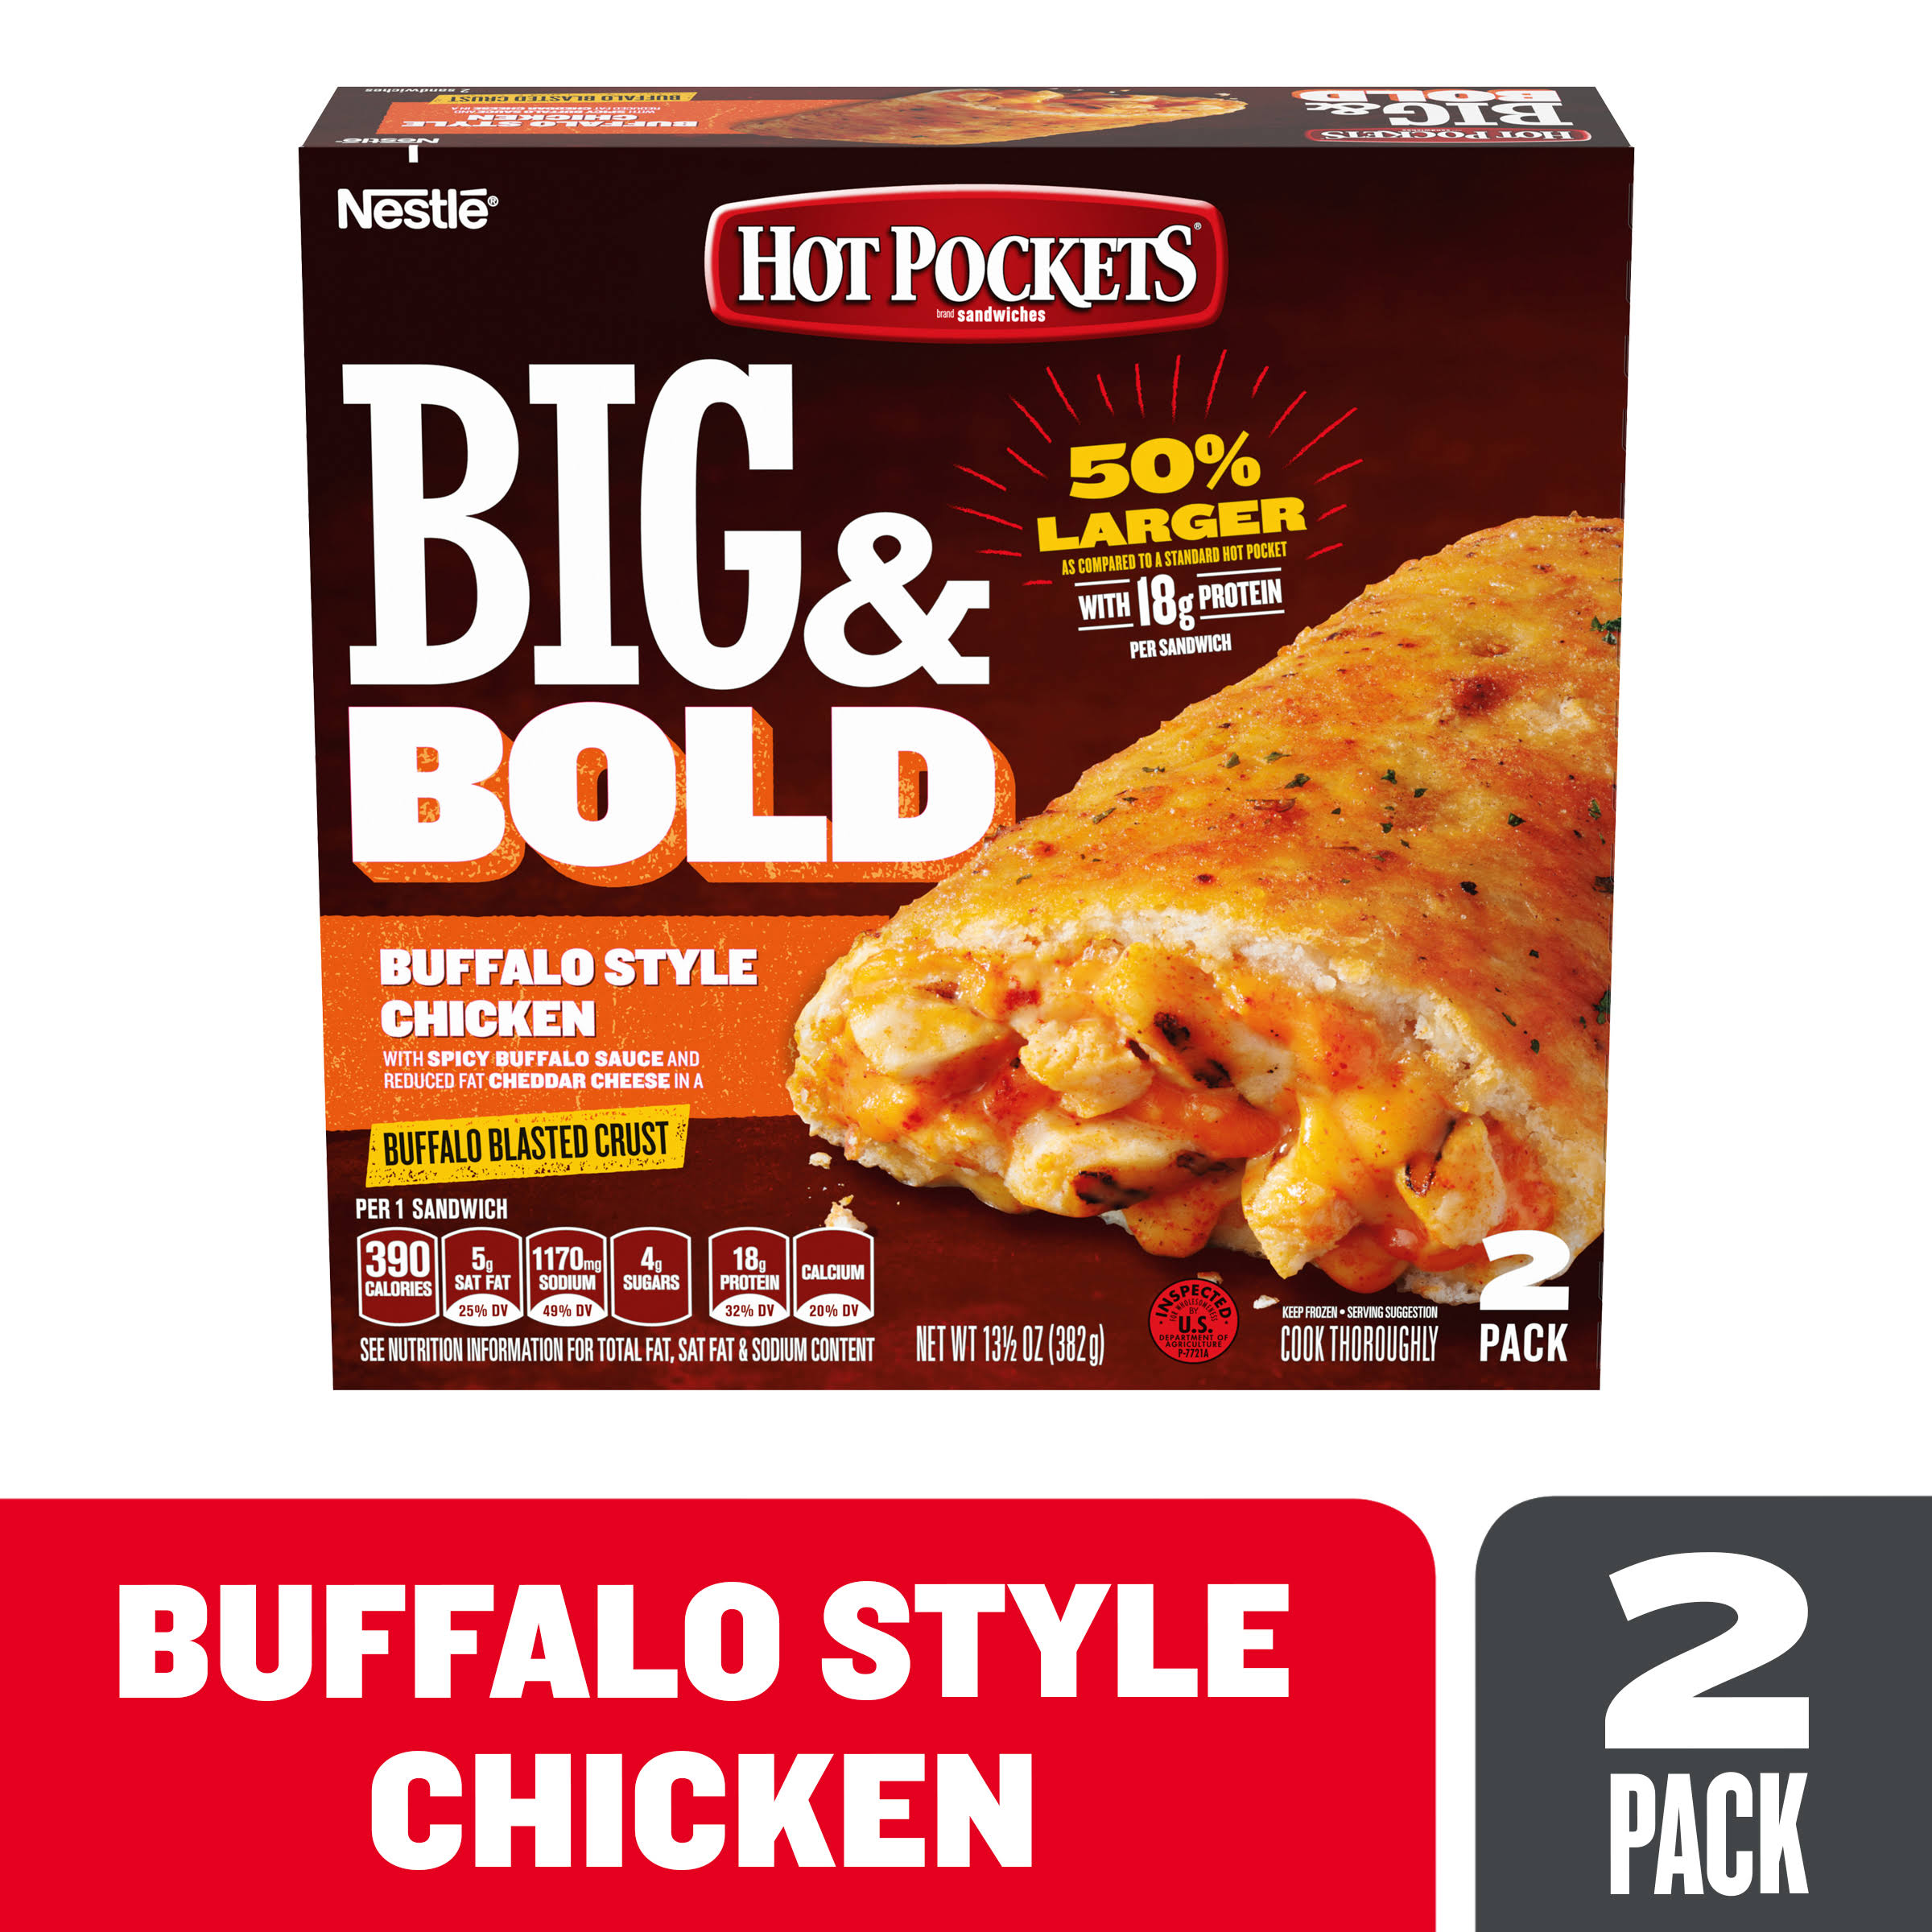 Hot Pockets Sandwiches, Buffalo Style Chicken, Big & Bold, 2 Pack - 2 sandwiches, 13.5 oz